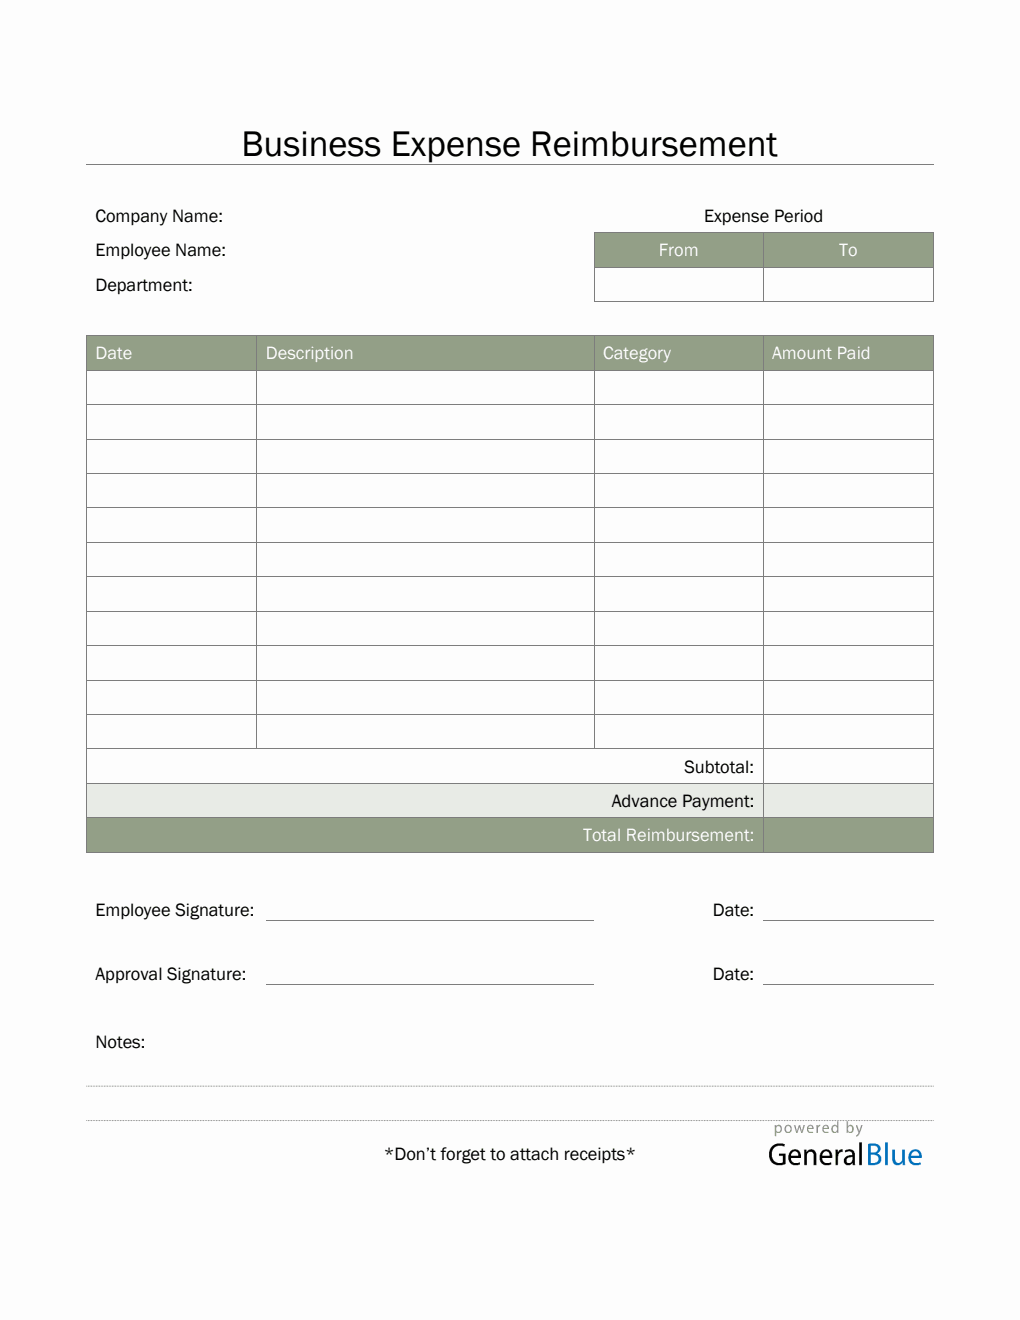 Business Expense Reimbursement in PDF (Basic)